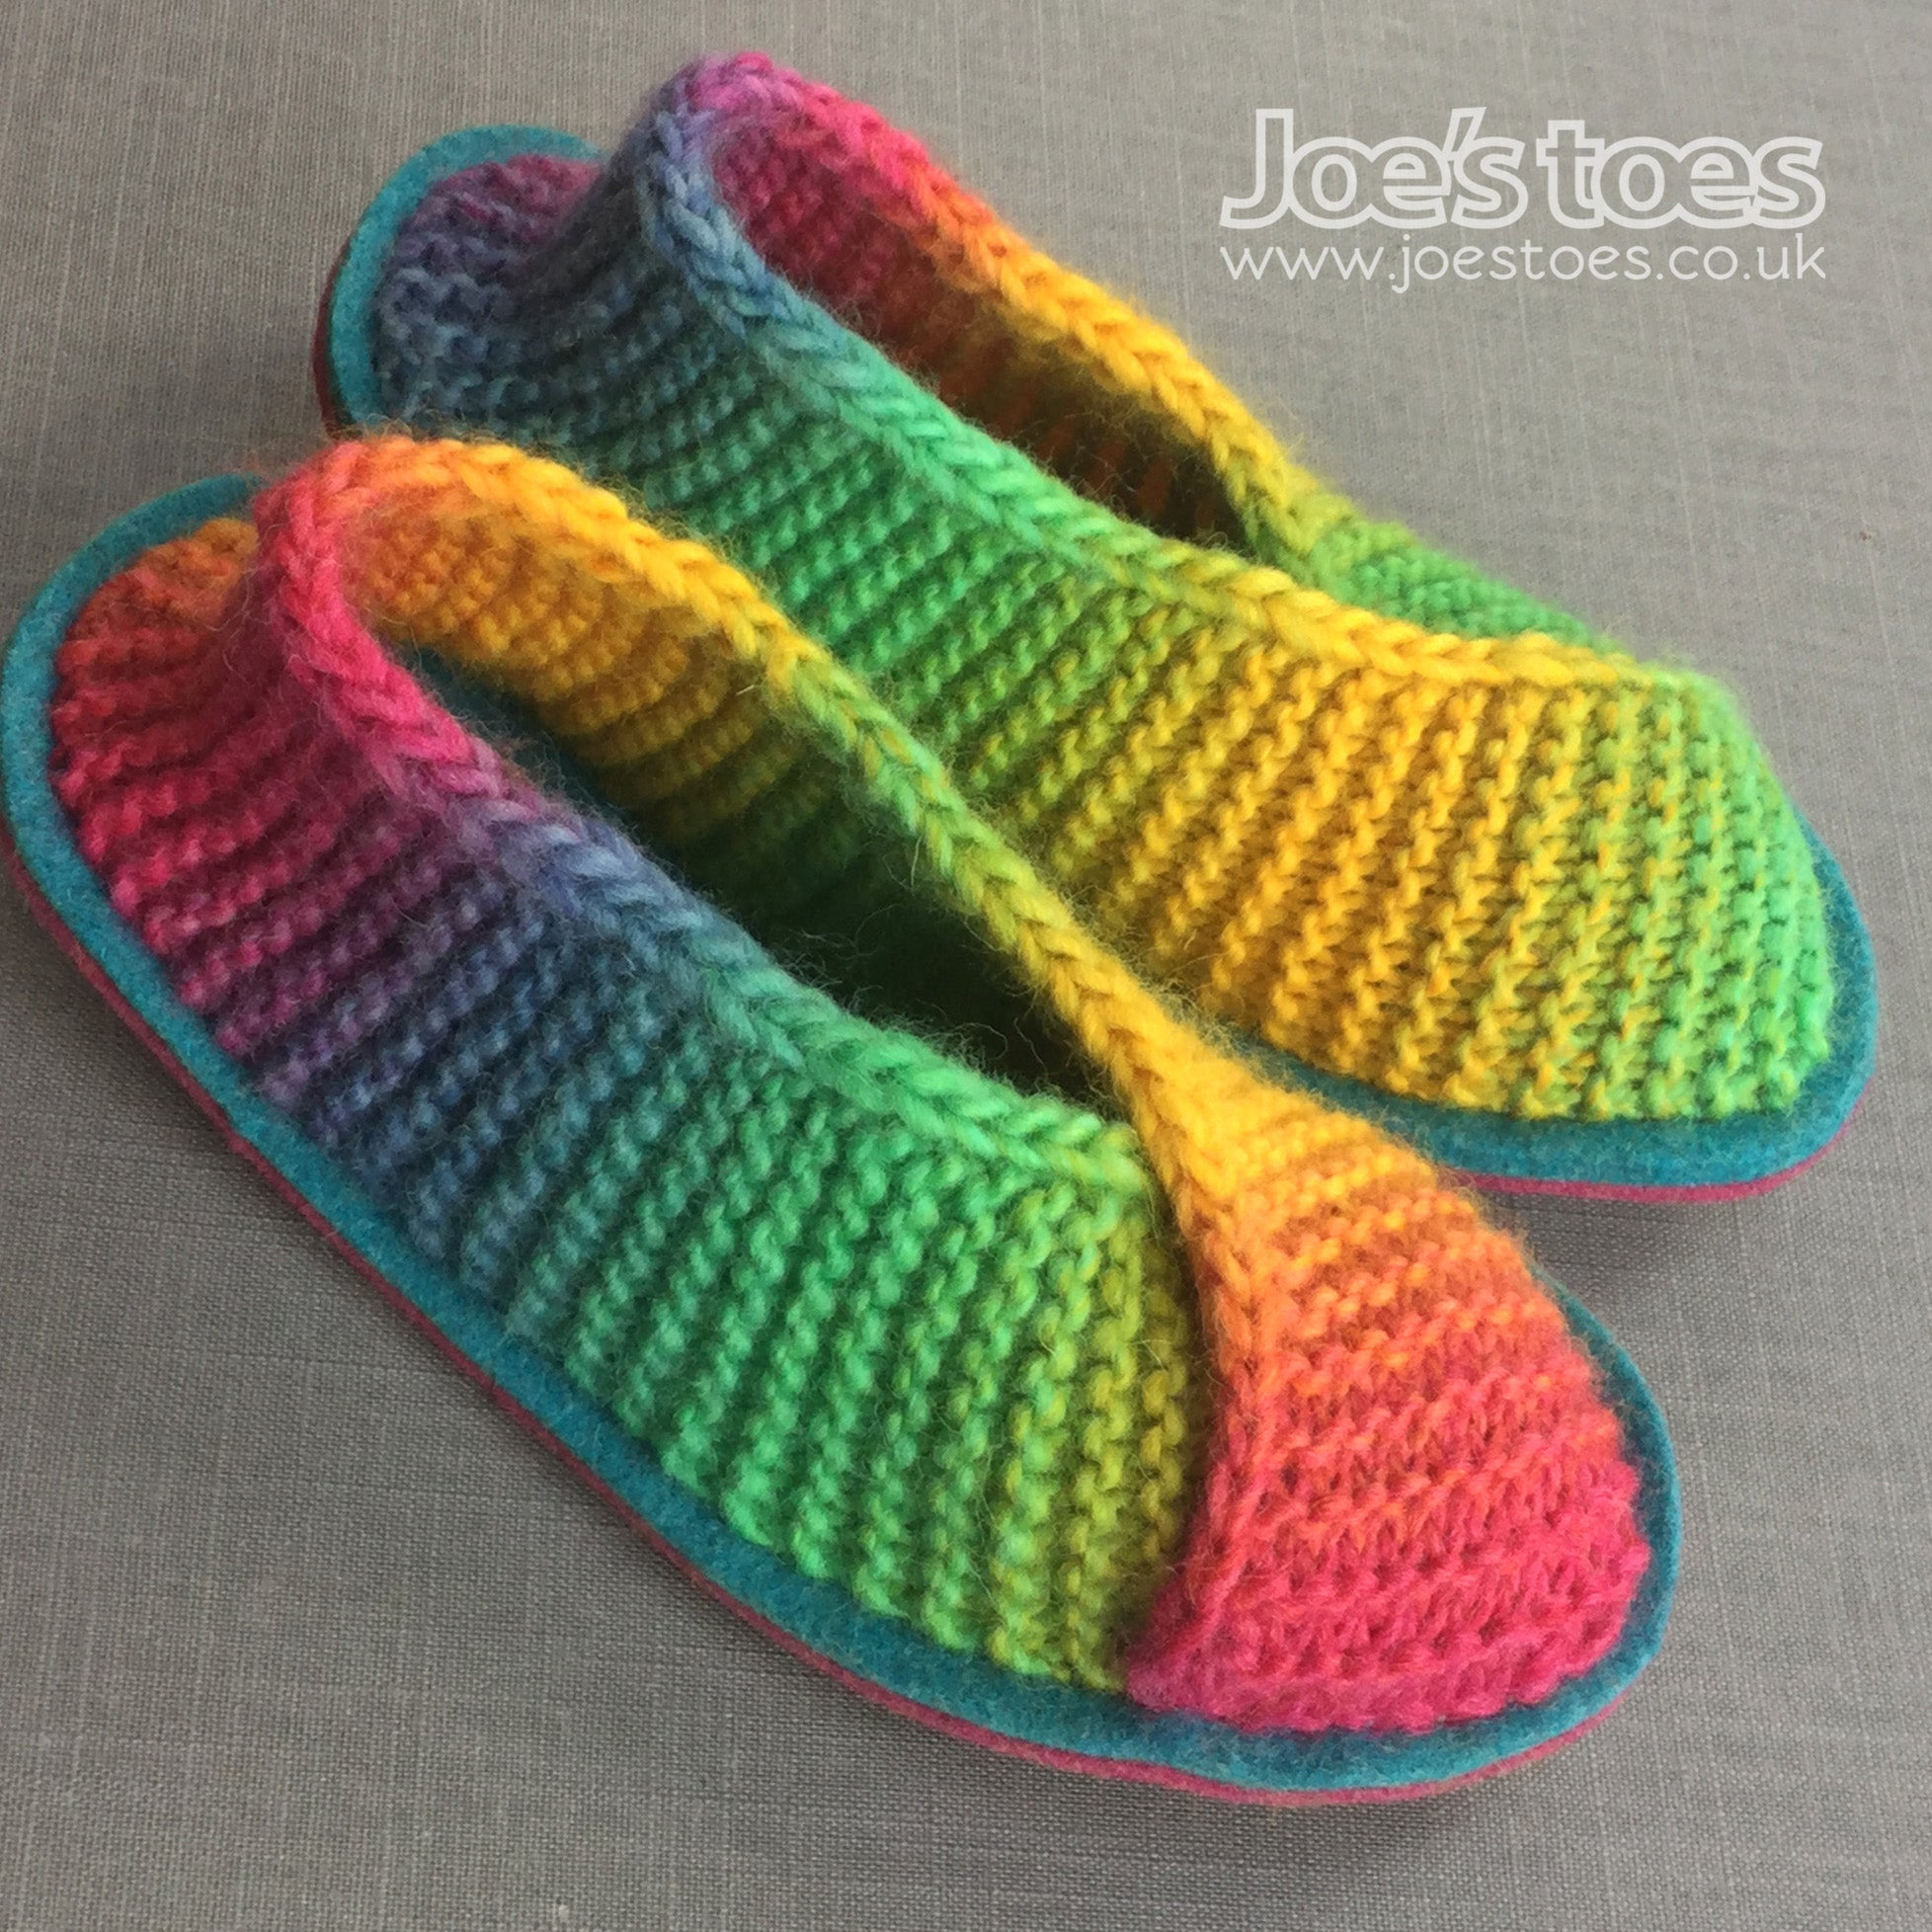 Joe's Toes Crossover Slipper Kit - Rainbow Slippers!